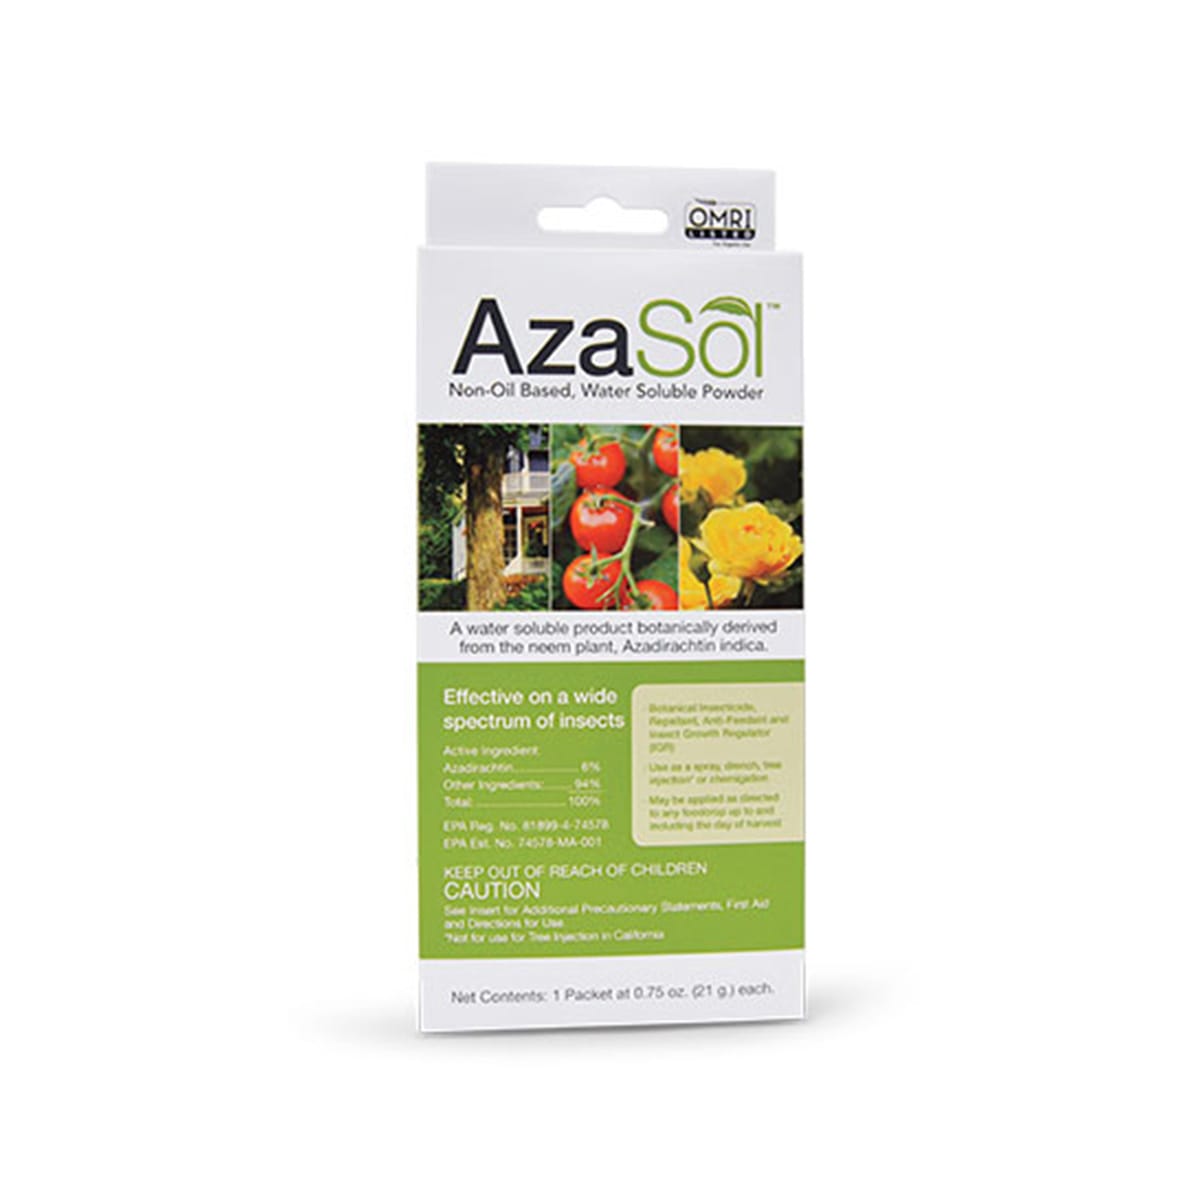 AzaSol .75 Oz Package